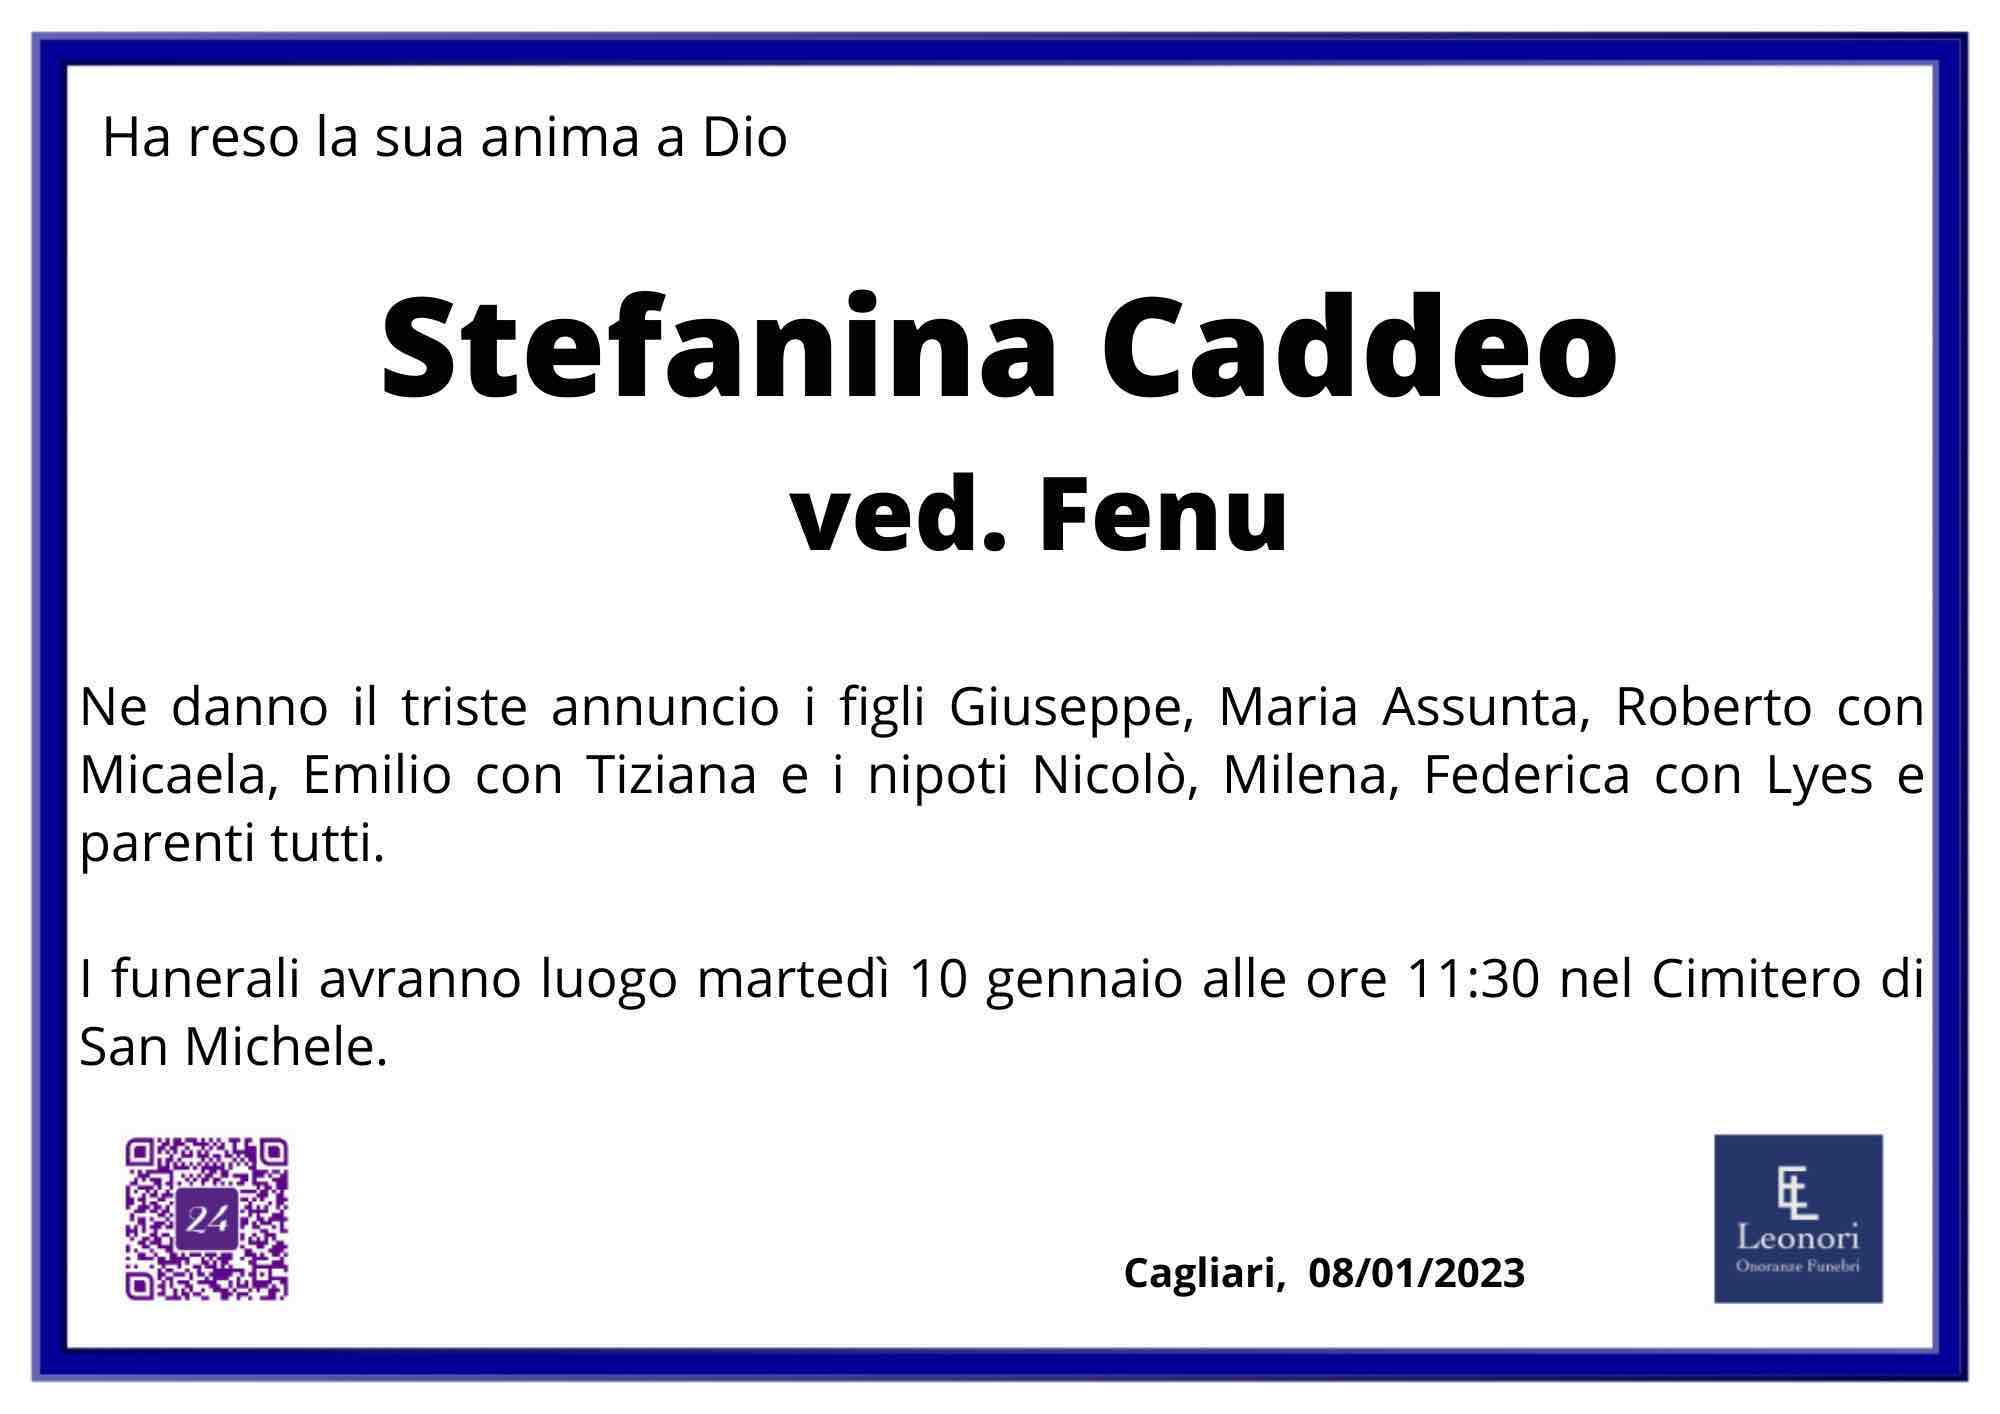 Stefanina Caddeo